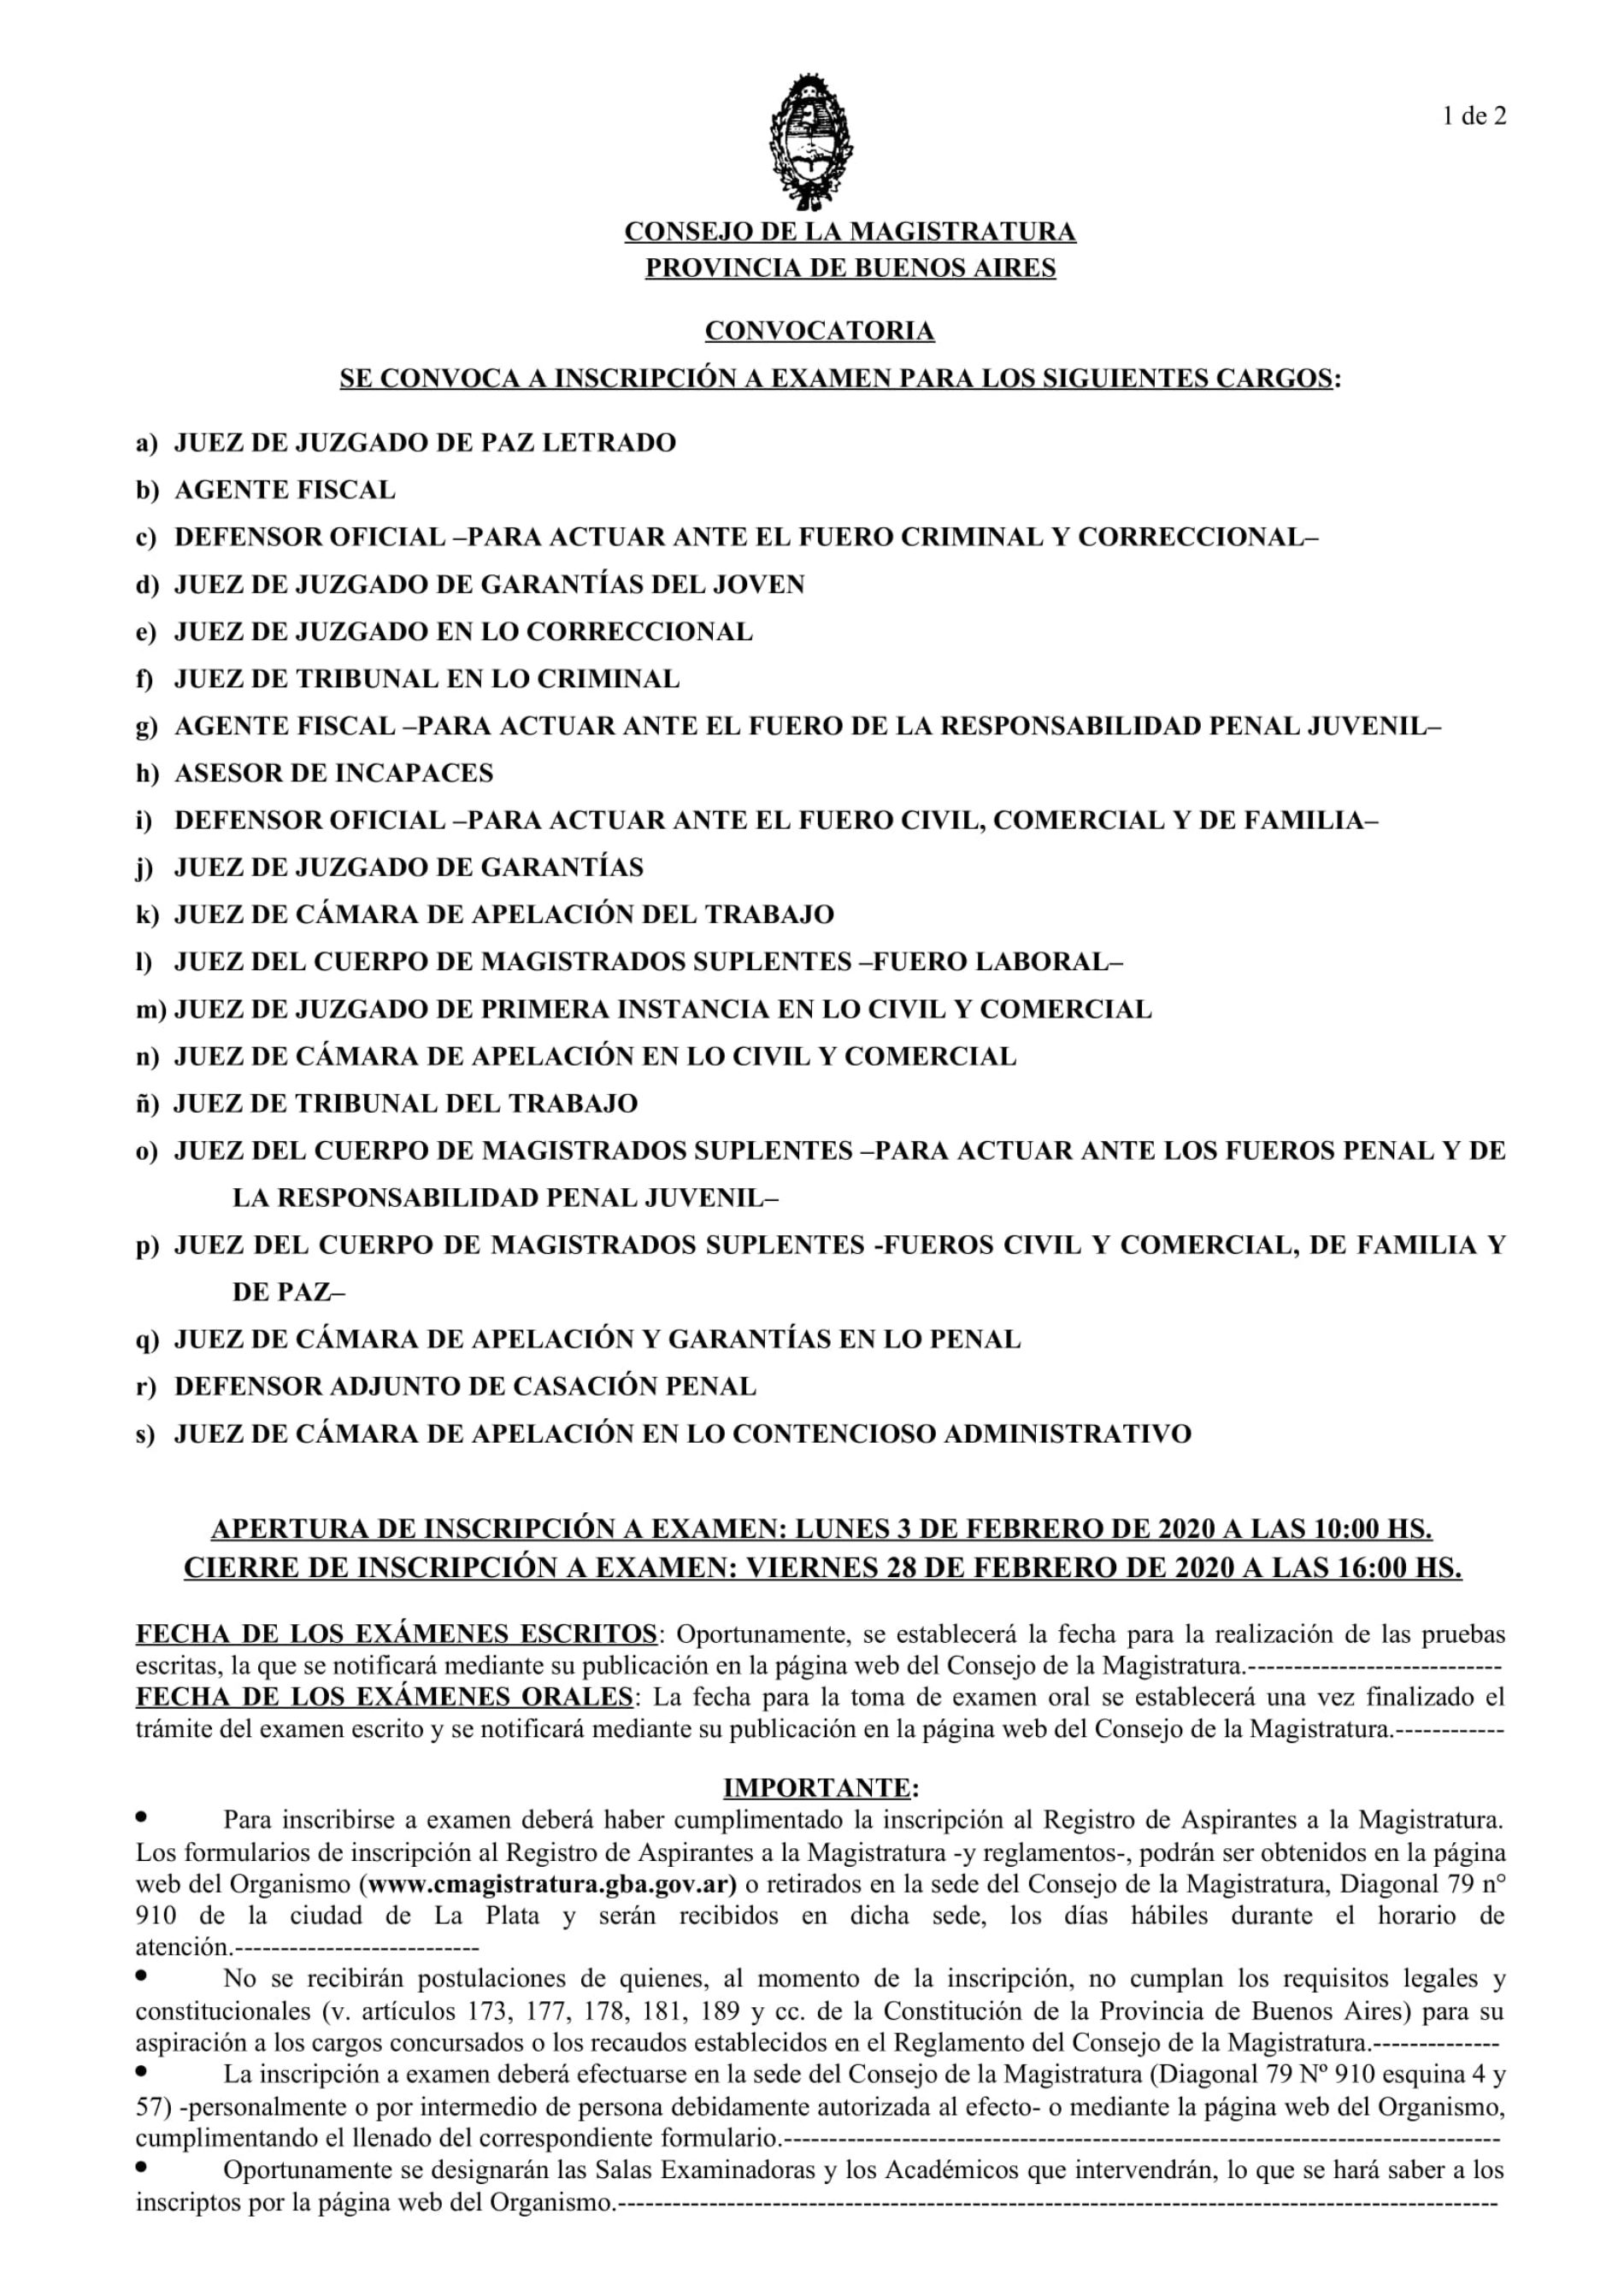 Consejo de la Magistratura de la Provincia de Buenos Aires. Convocatoria Nro. 1